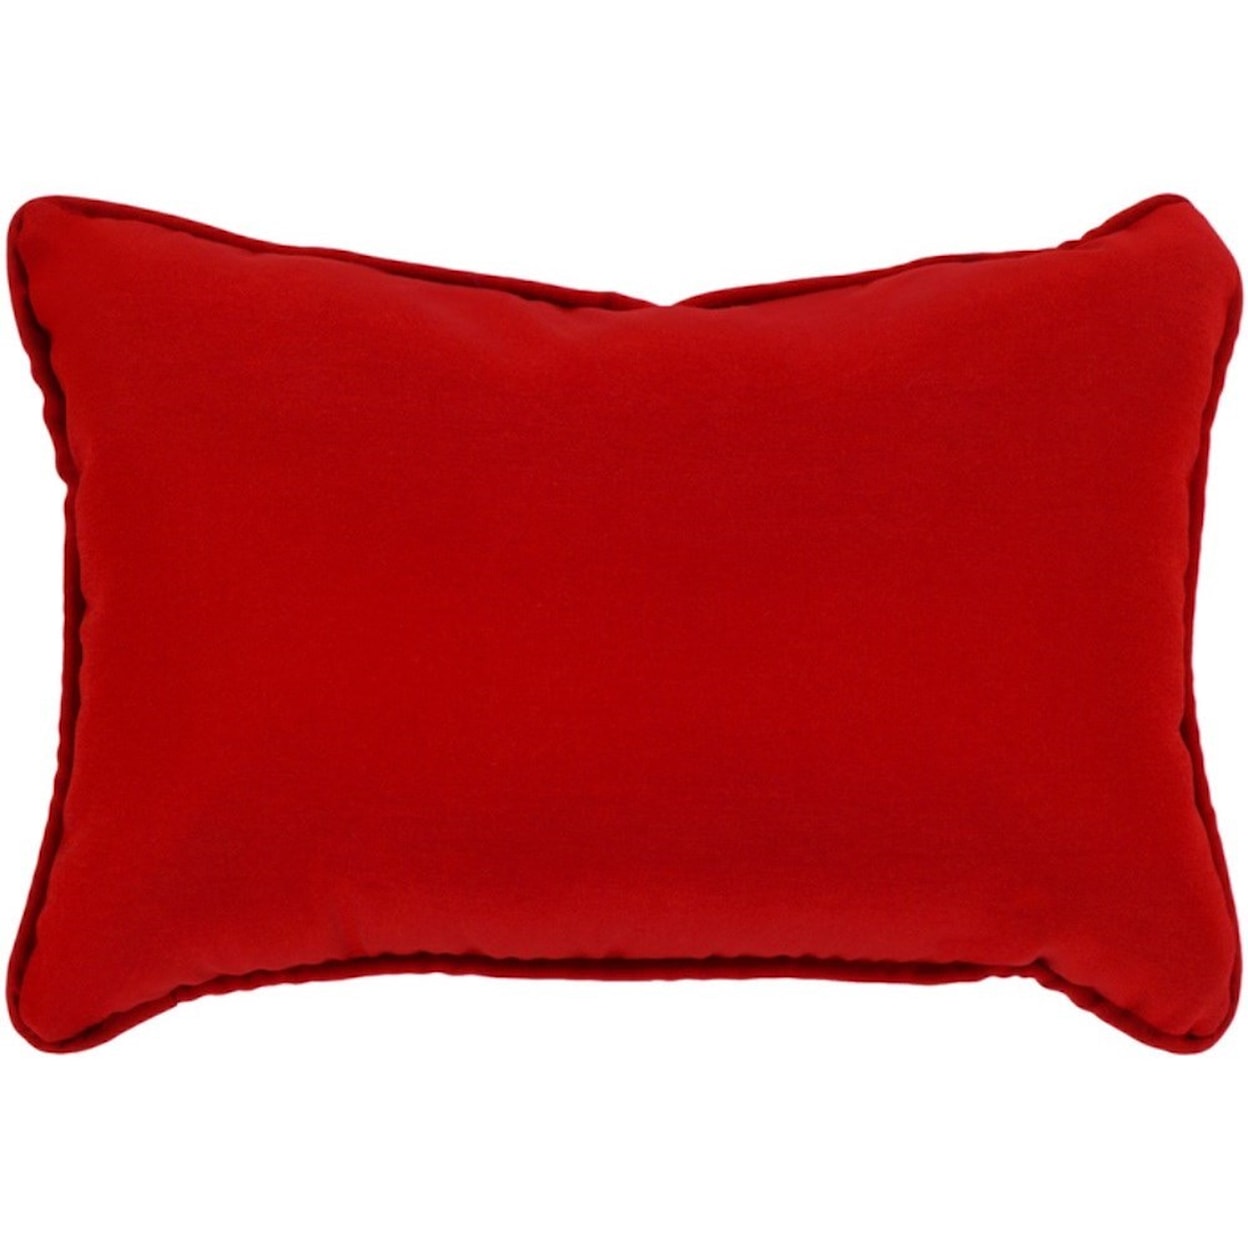 Ruby-Gordon Accents Essien Pillow